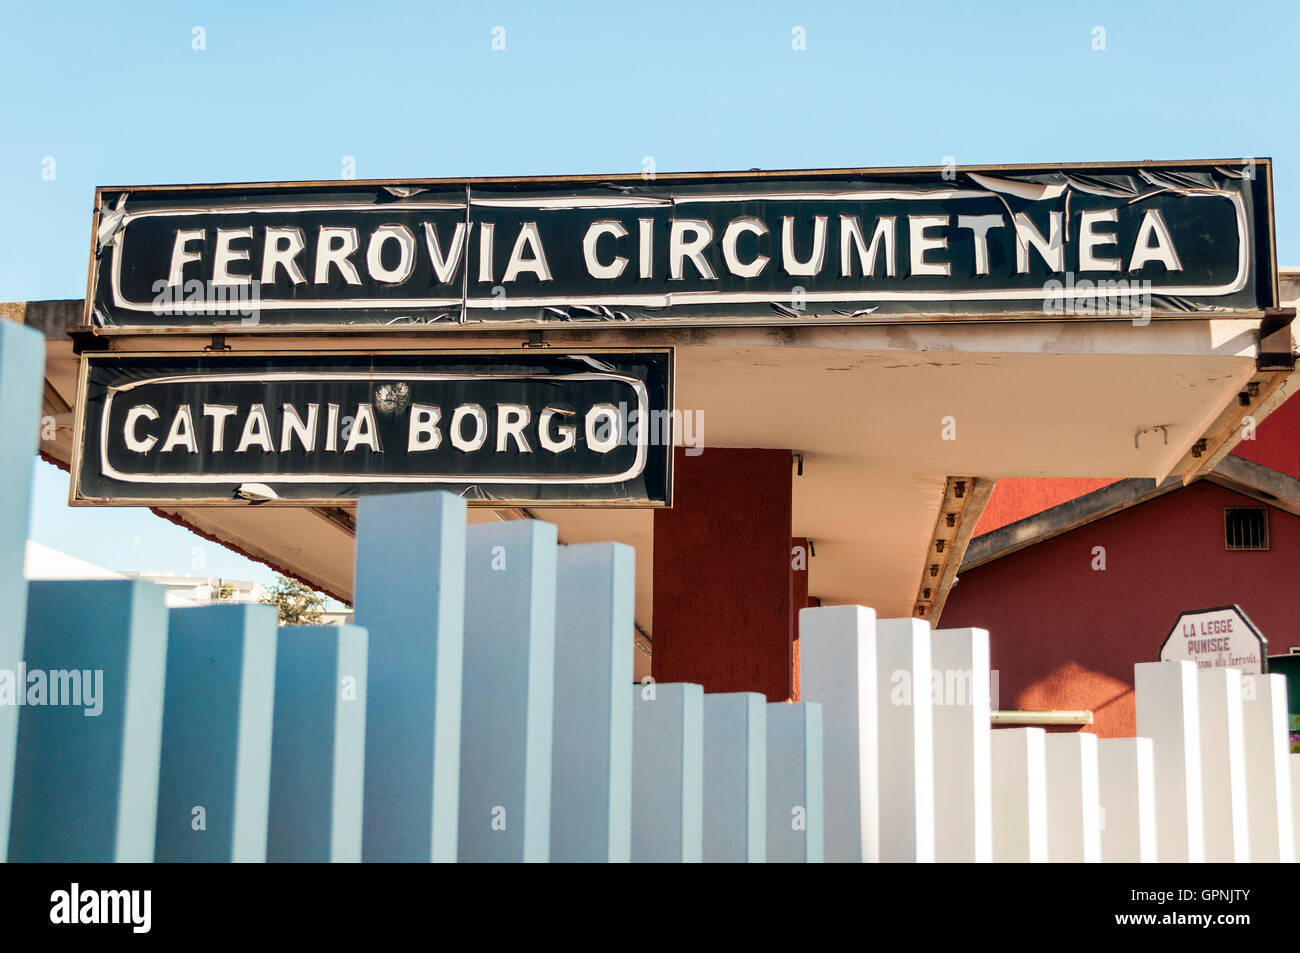 Catania Borgo : This is the station to catch the Ferrovia Circumetnea, the train that goes around Mount.Etna Stock Photo